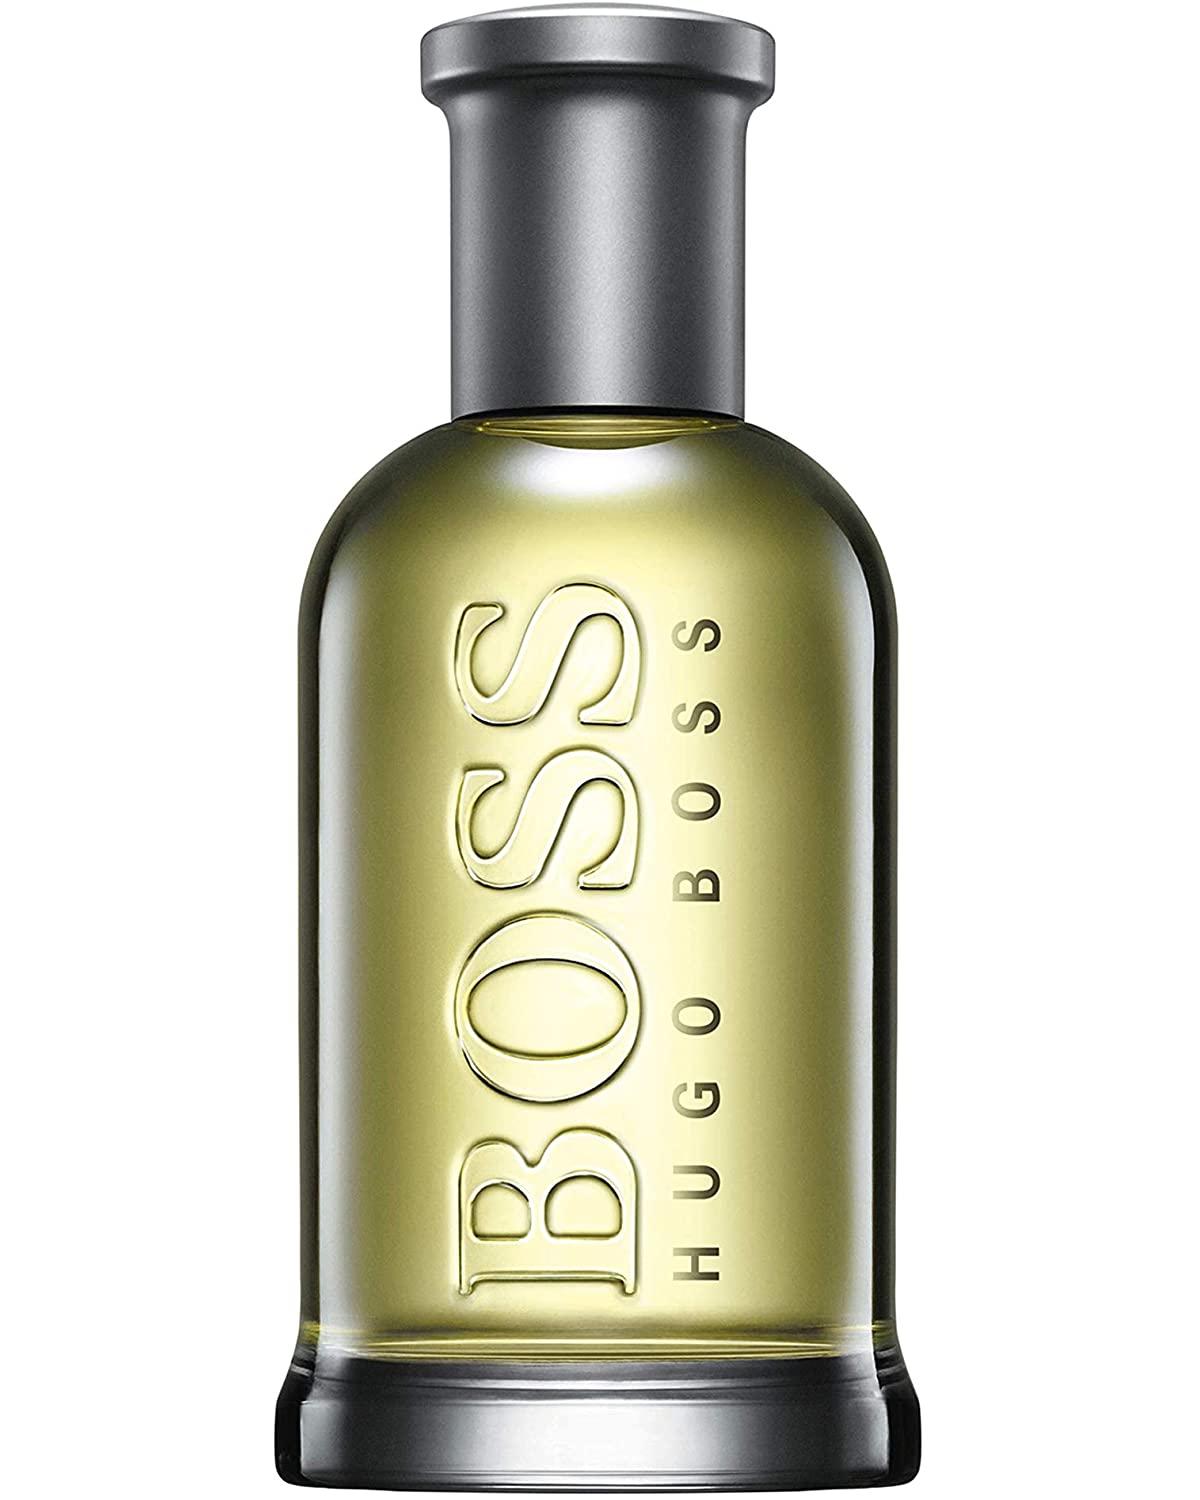 Boss Bottled Hugo Boss - Perfume Masculino - Eau de Toilette - 100ml